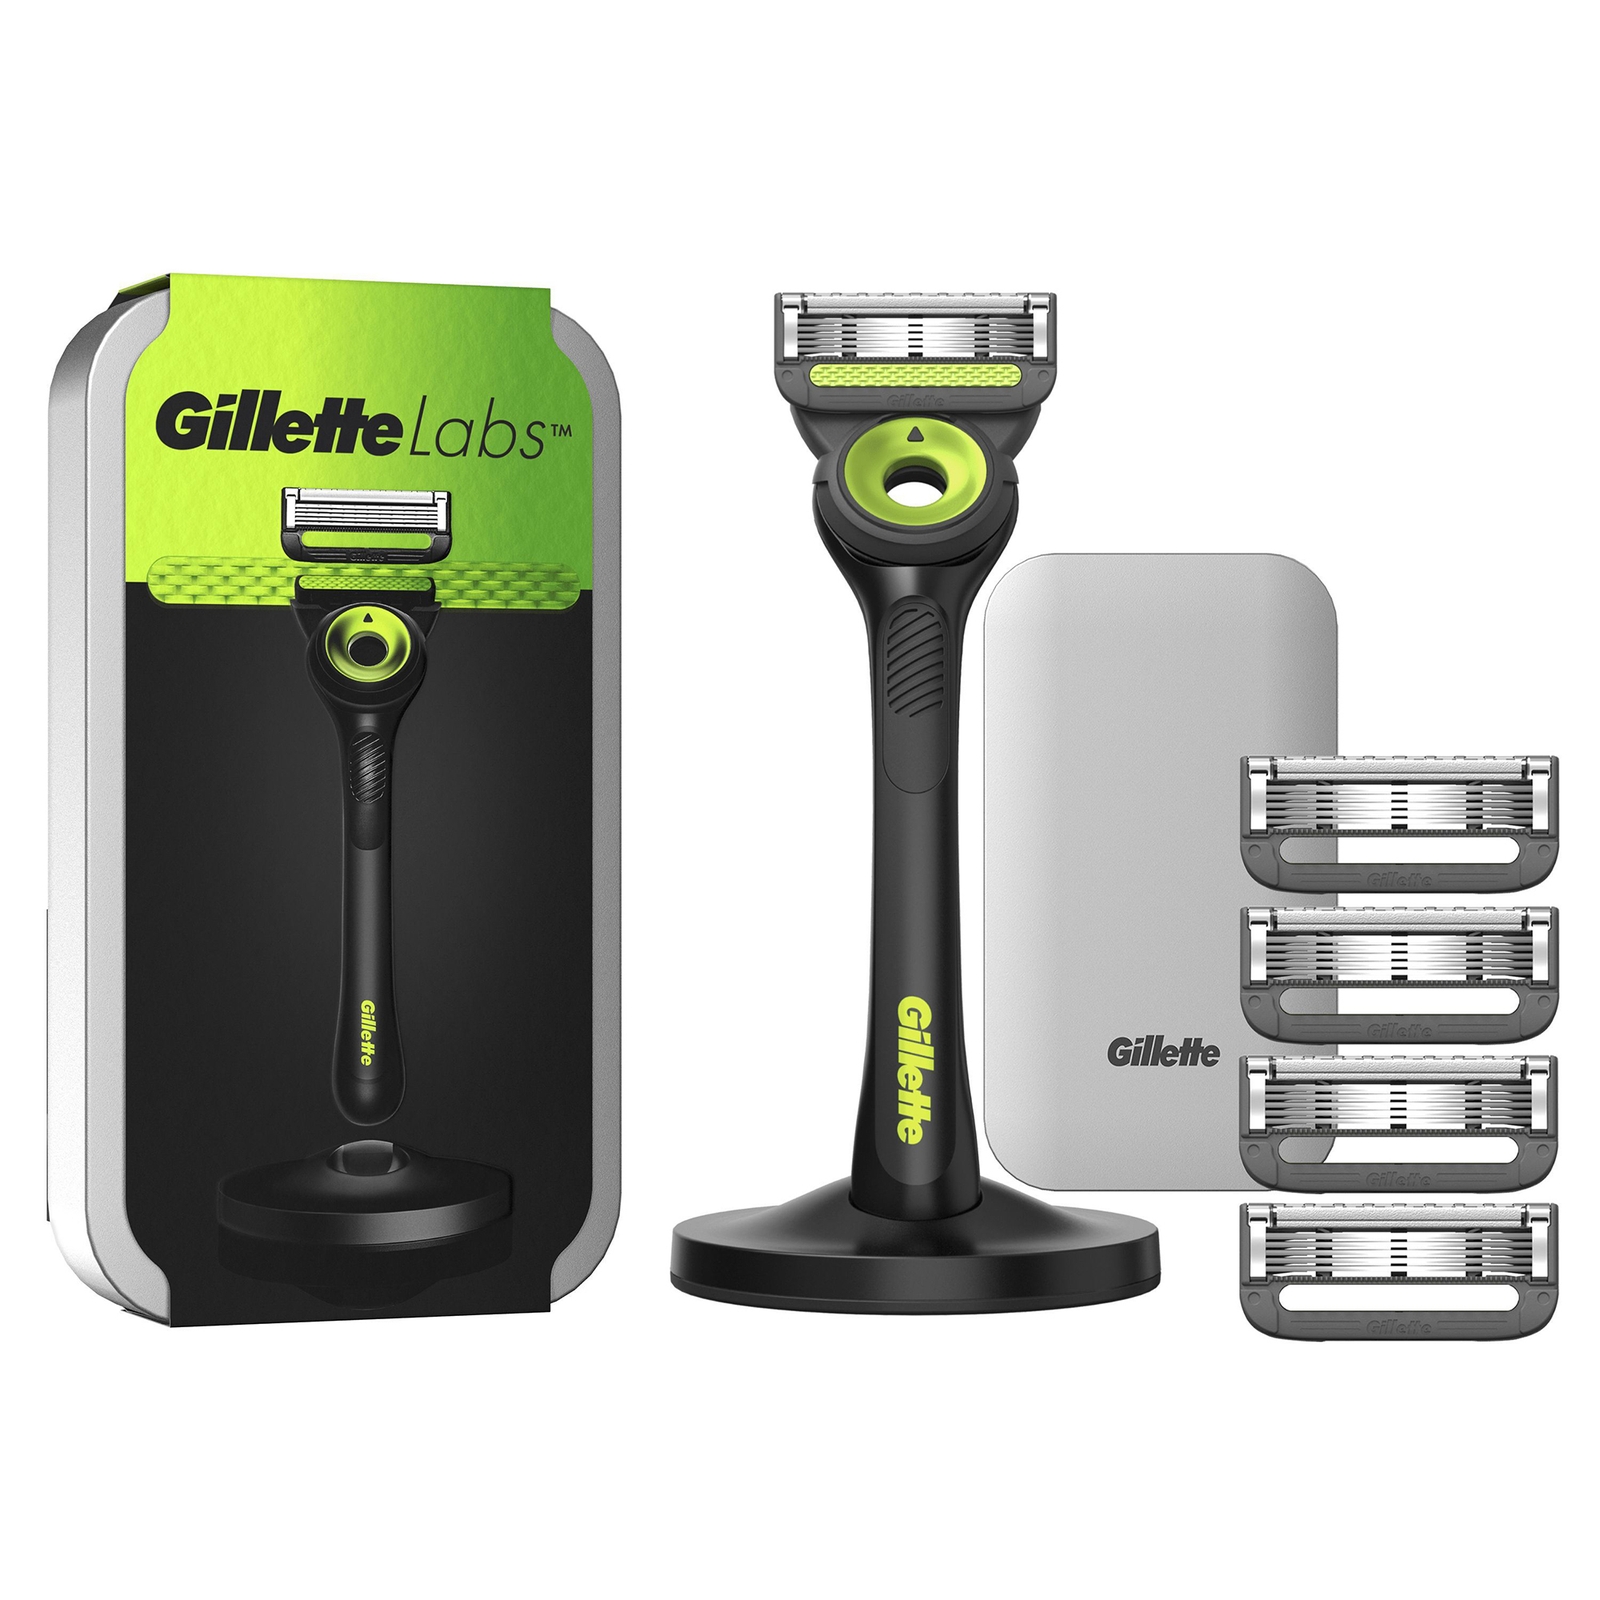 Gillette Labs Razor Travel Case and 4 Blade Refills - Neon Night Green